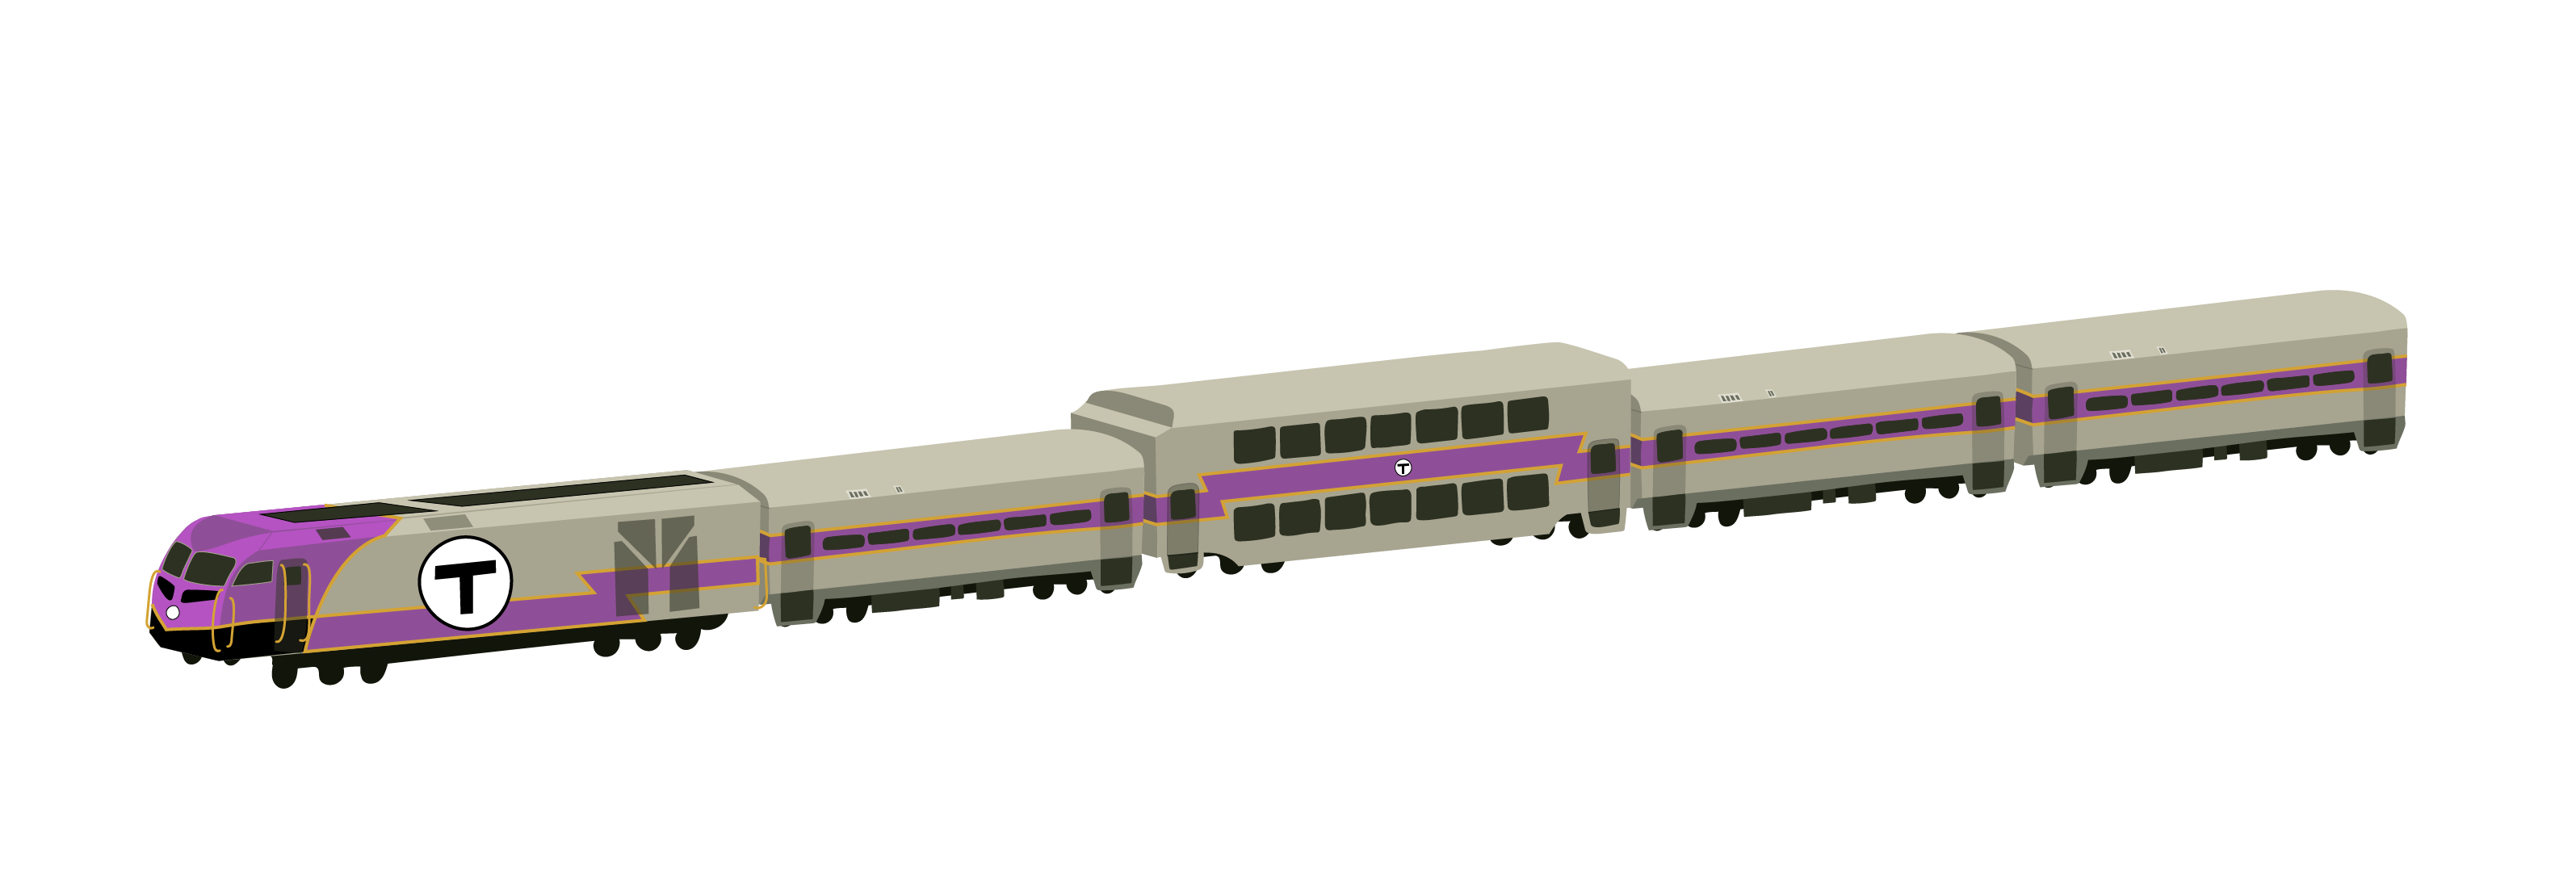 Fairmount commuter rail train